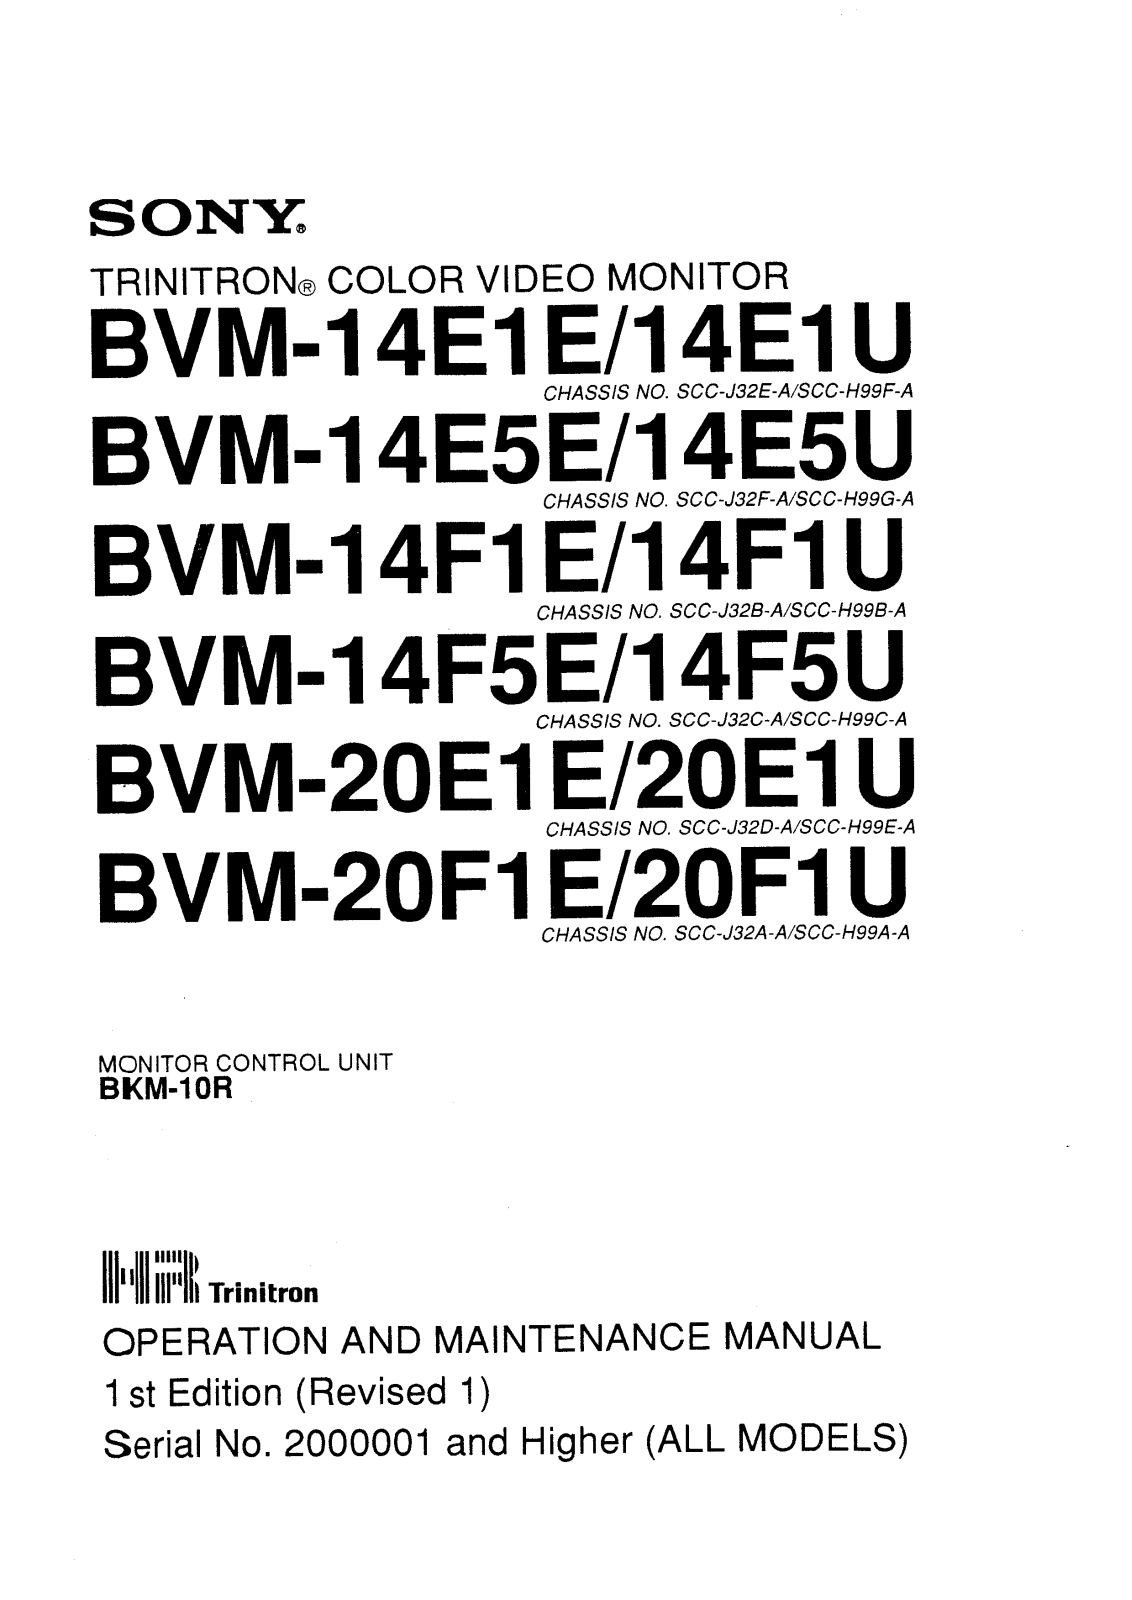 Sony BVM-14E1, BVM-14E5, BVM-14F1, BVM-14F5, BVM-20E1 Service Manual